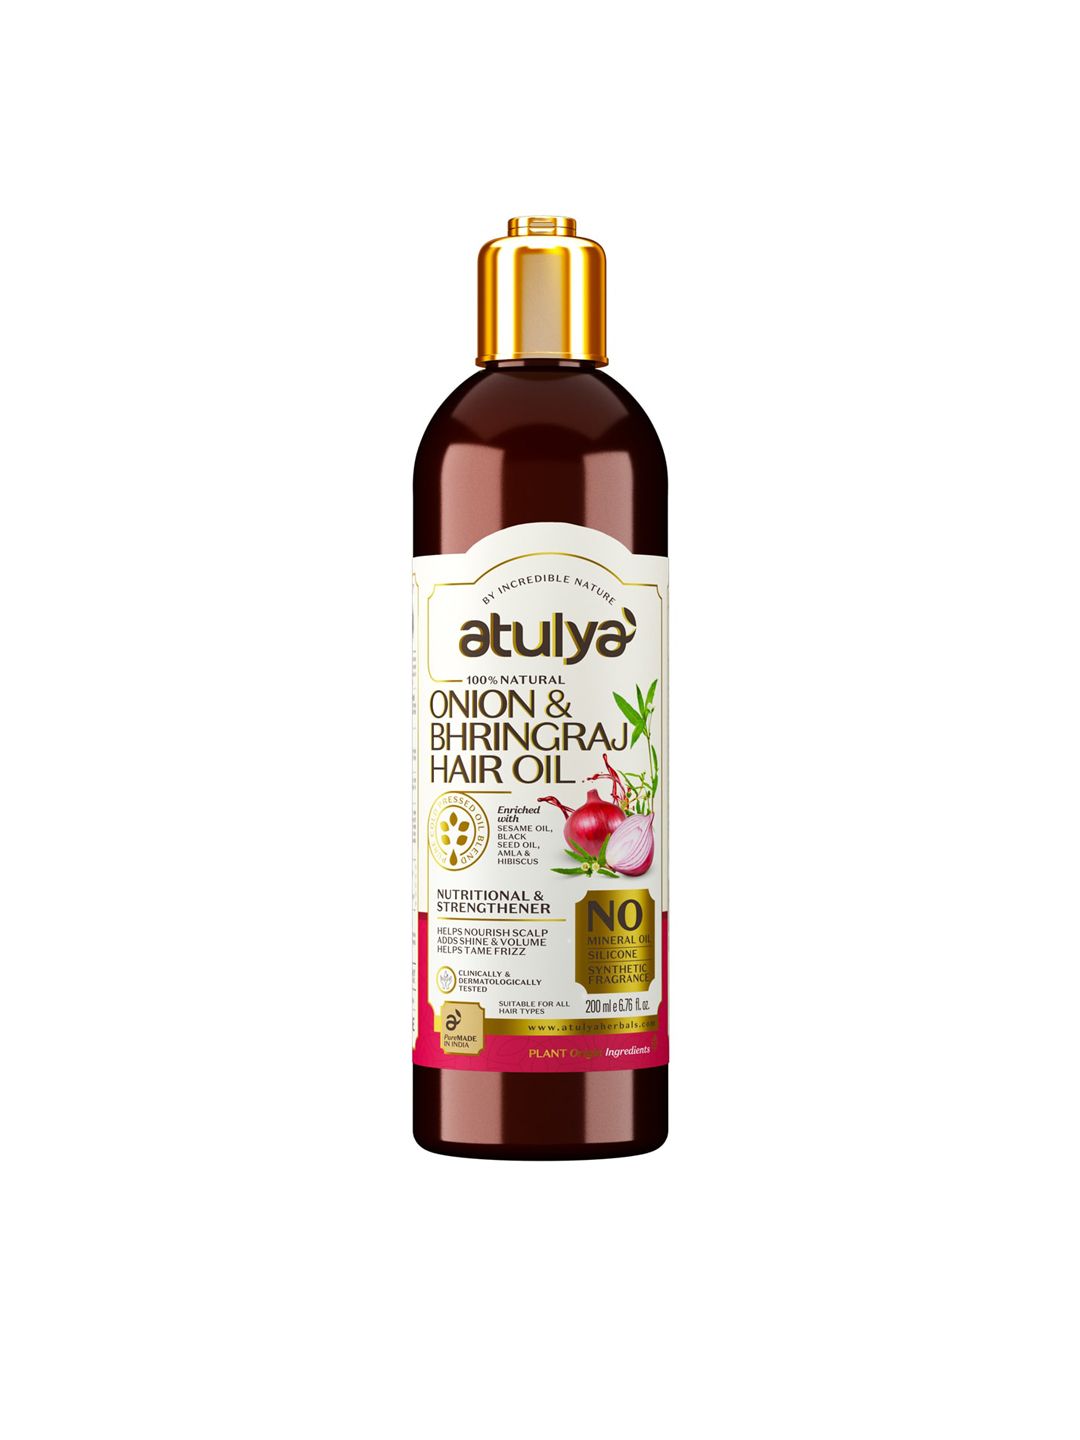 Atulya Onion & Bhringraj Hair Oil 200 ml Price in India